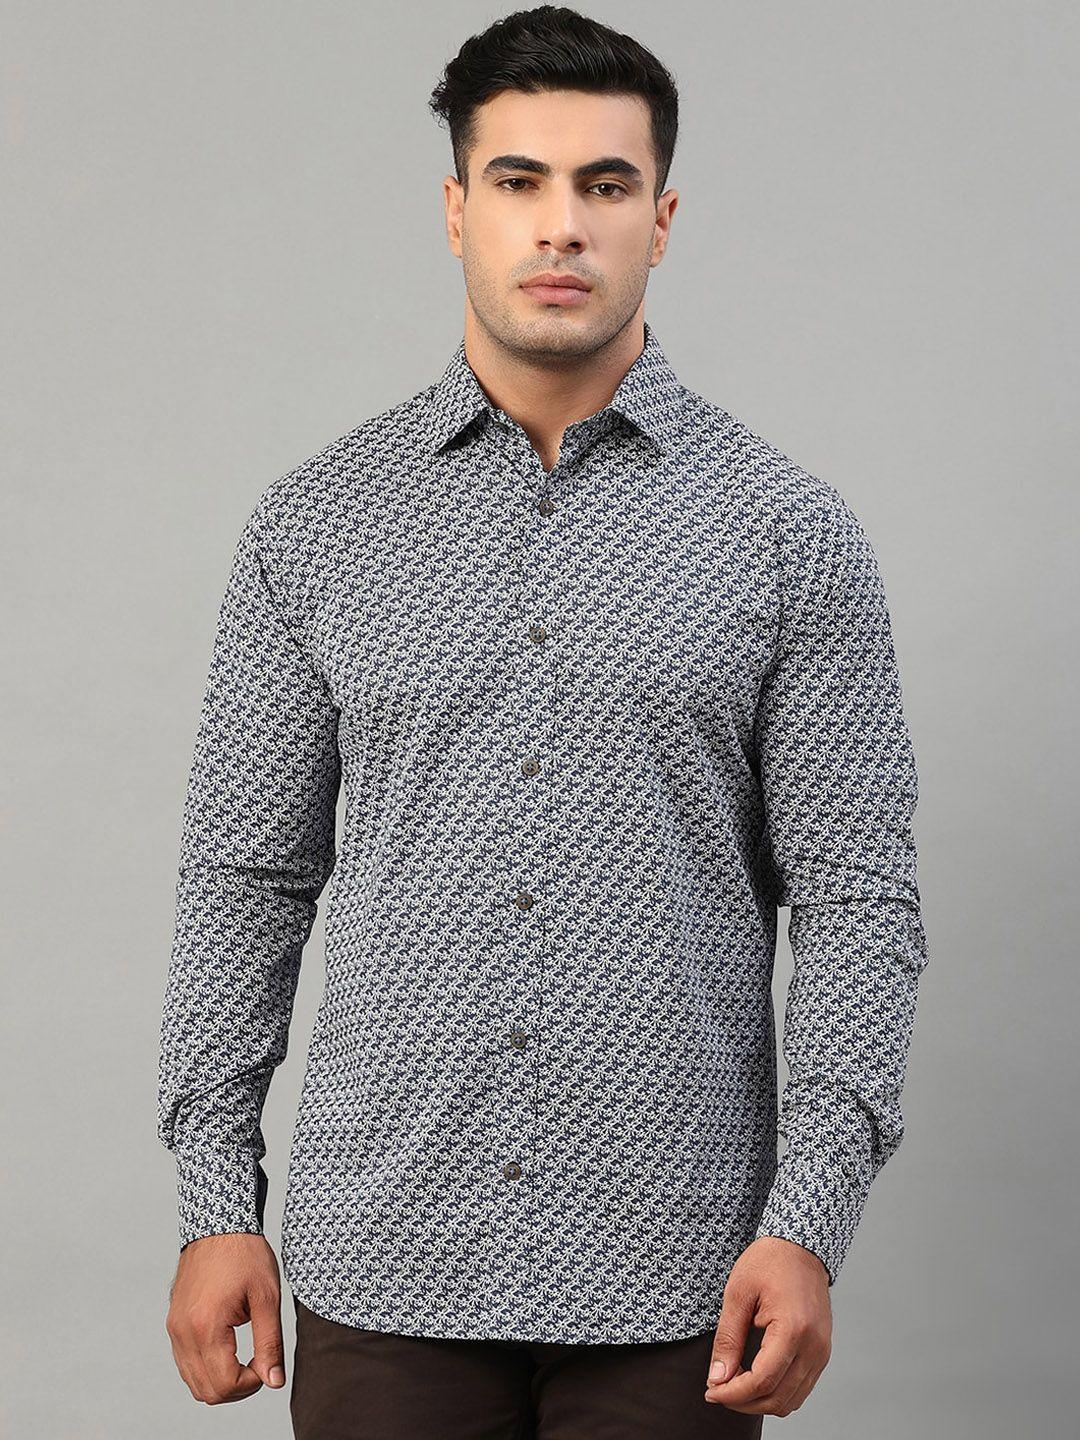 matinique men navy blue slim fit floral printed cotton casual shirt